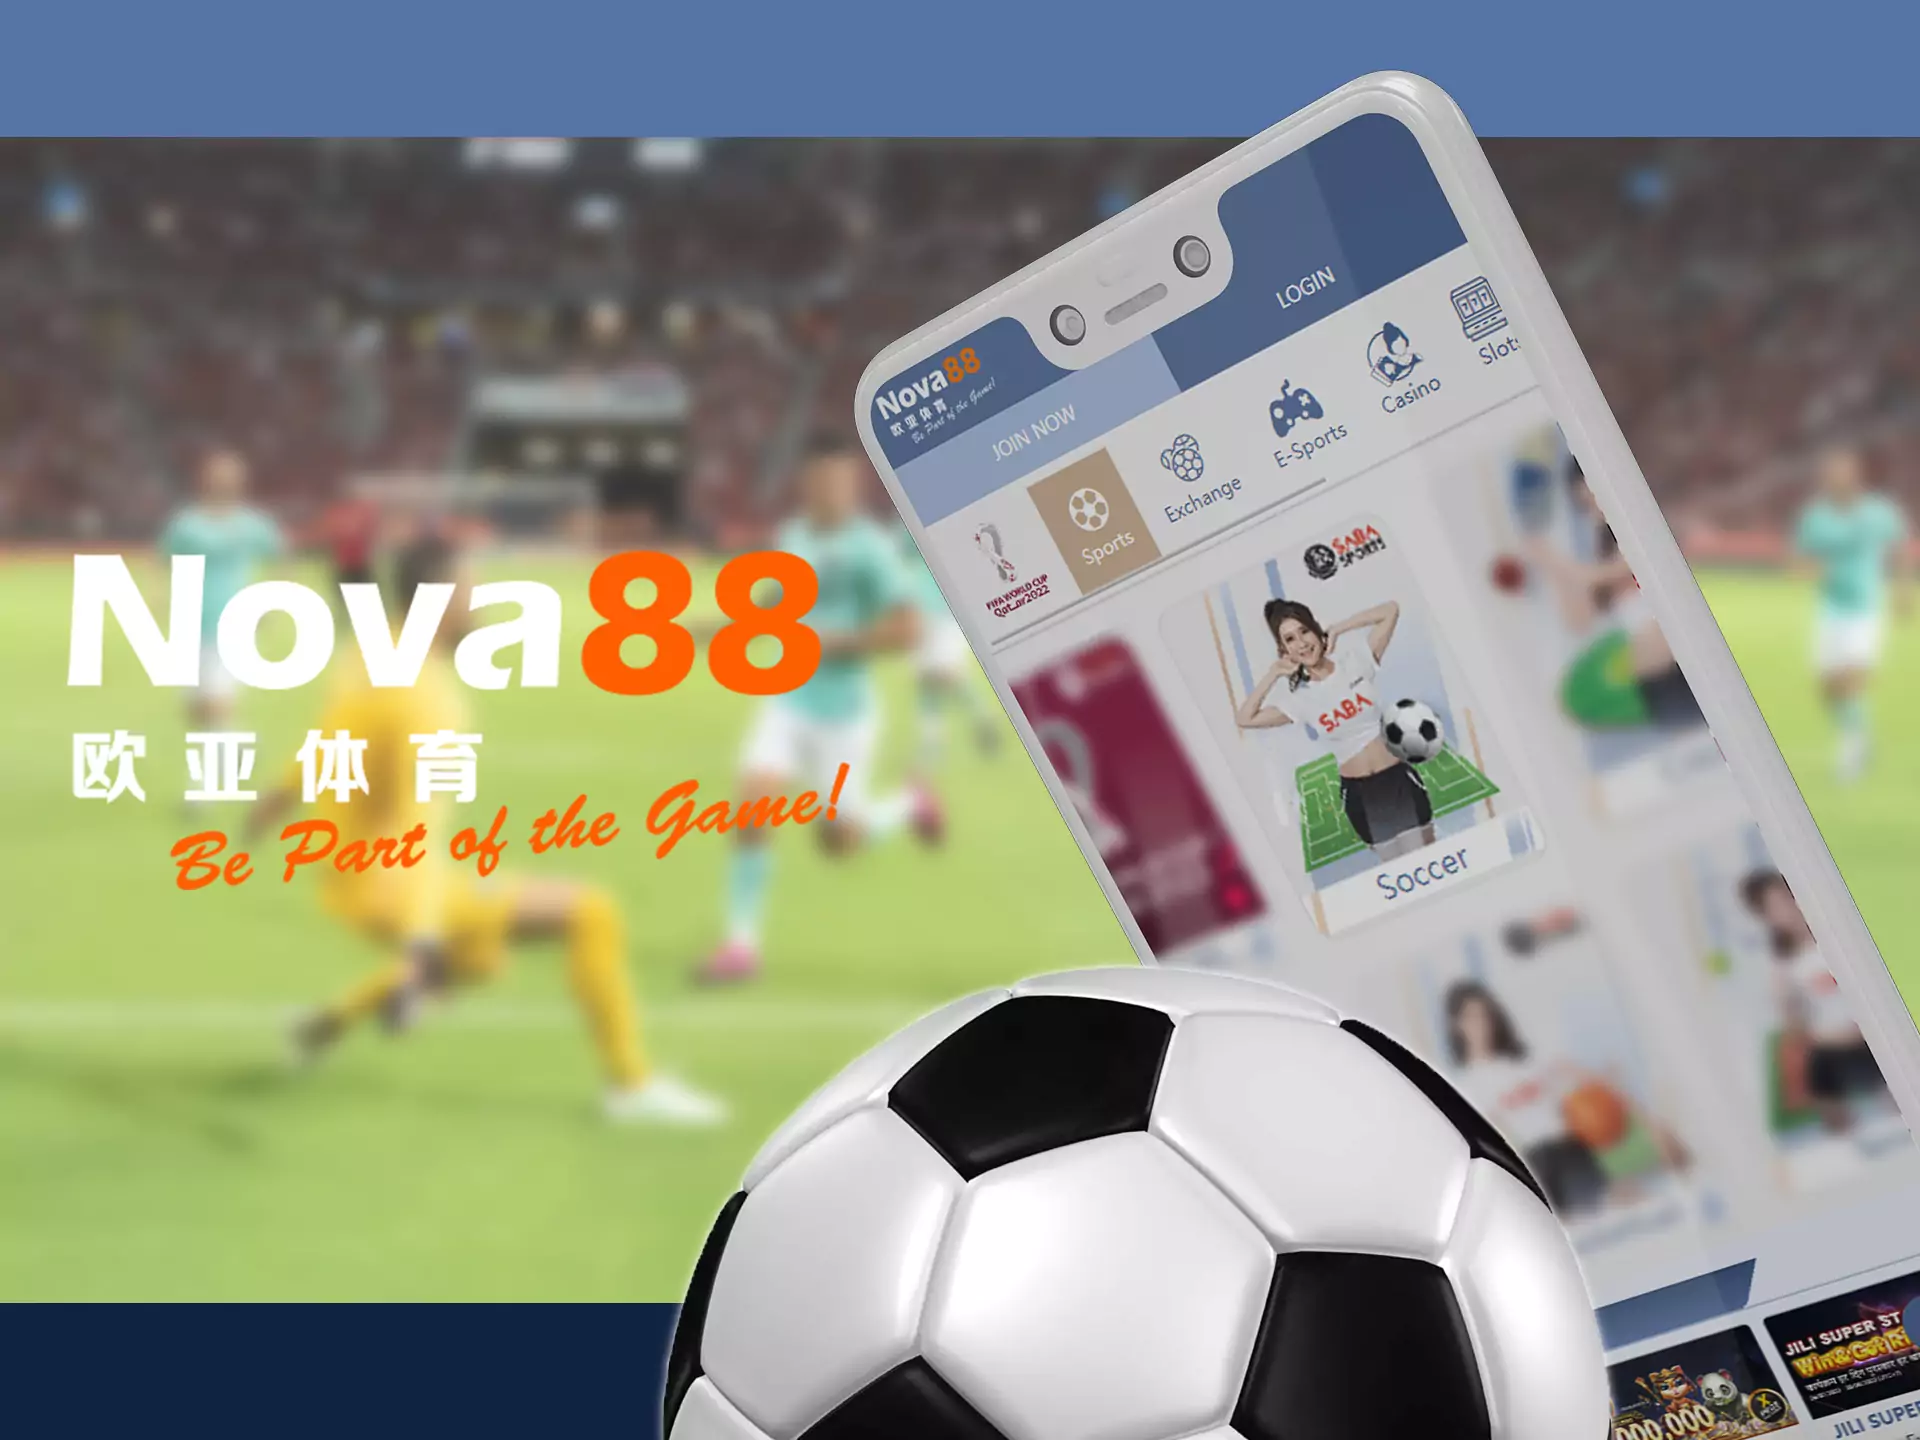 Bet on football matches in Nova88 app.